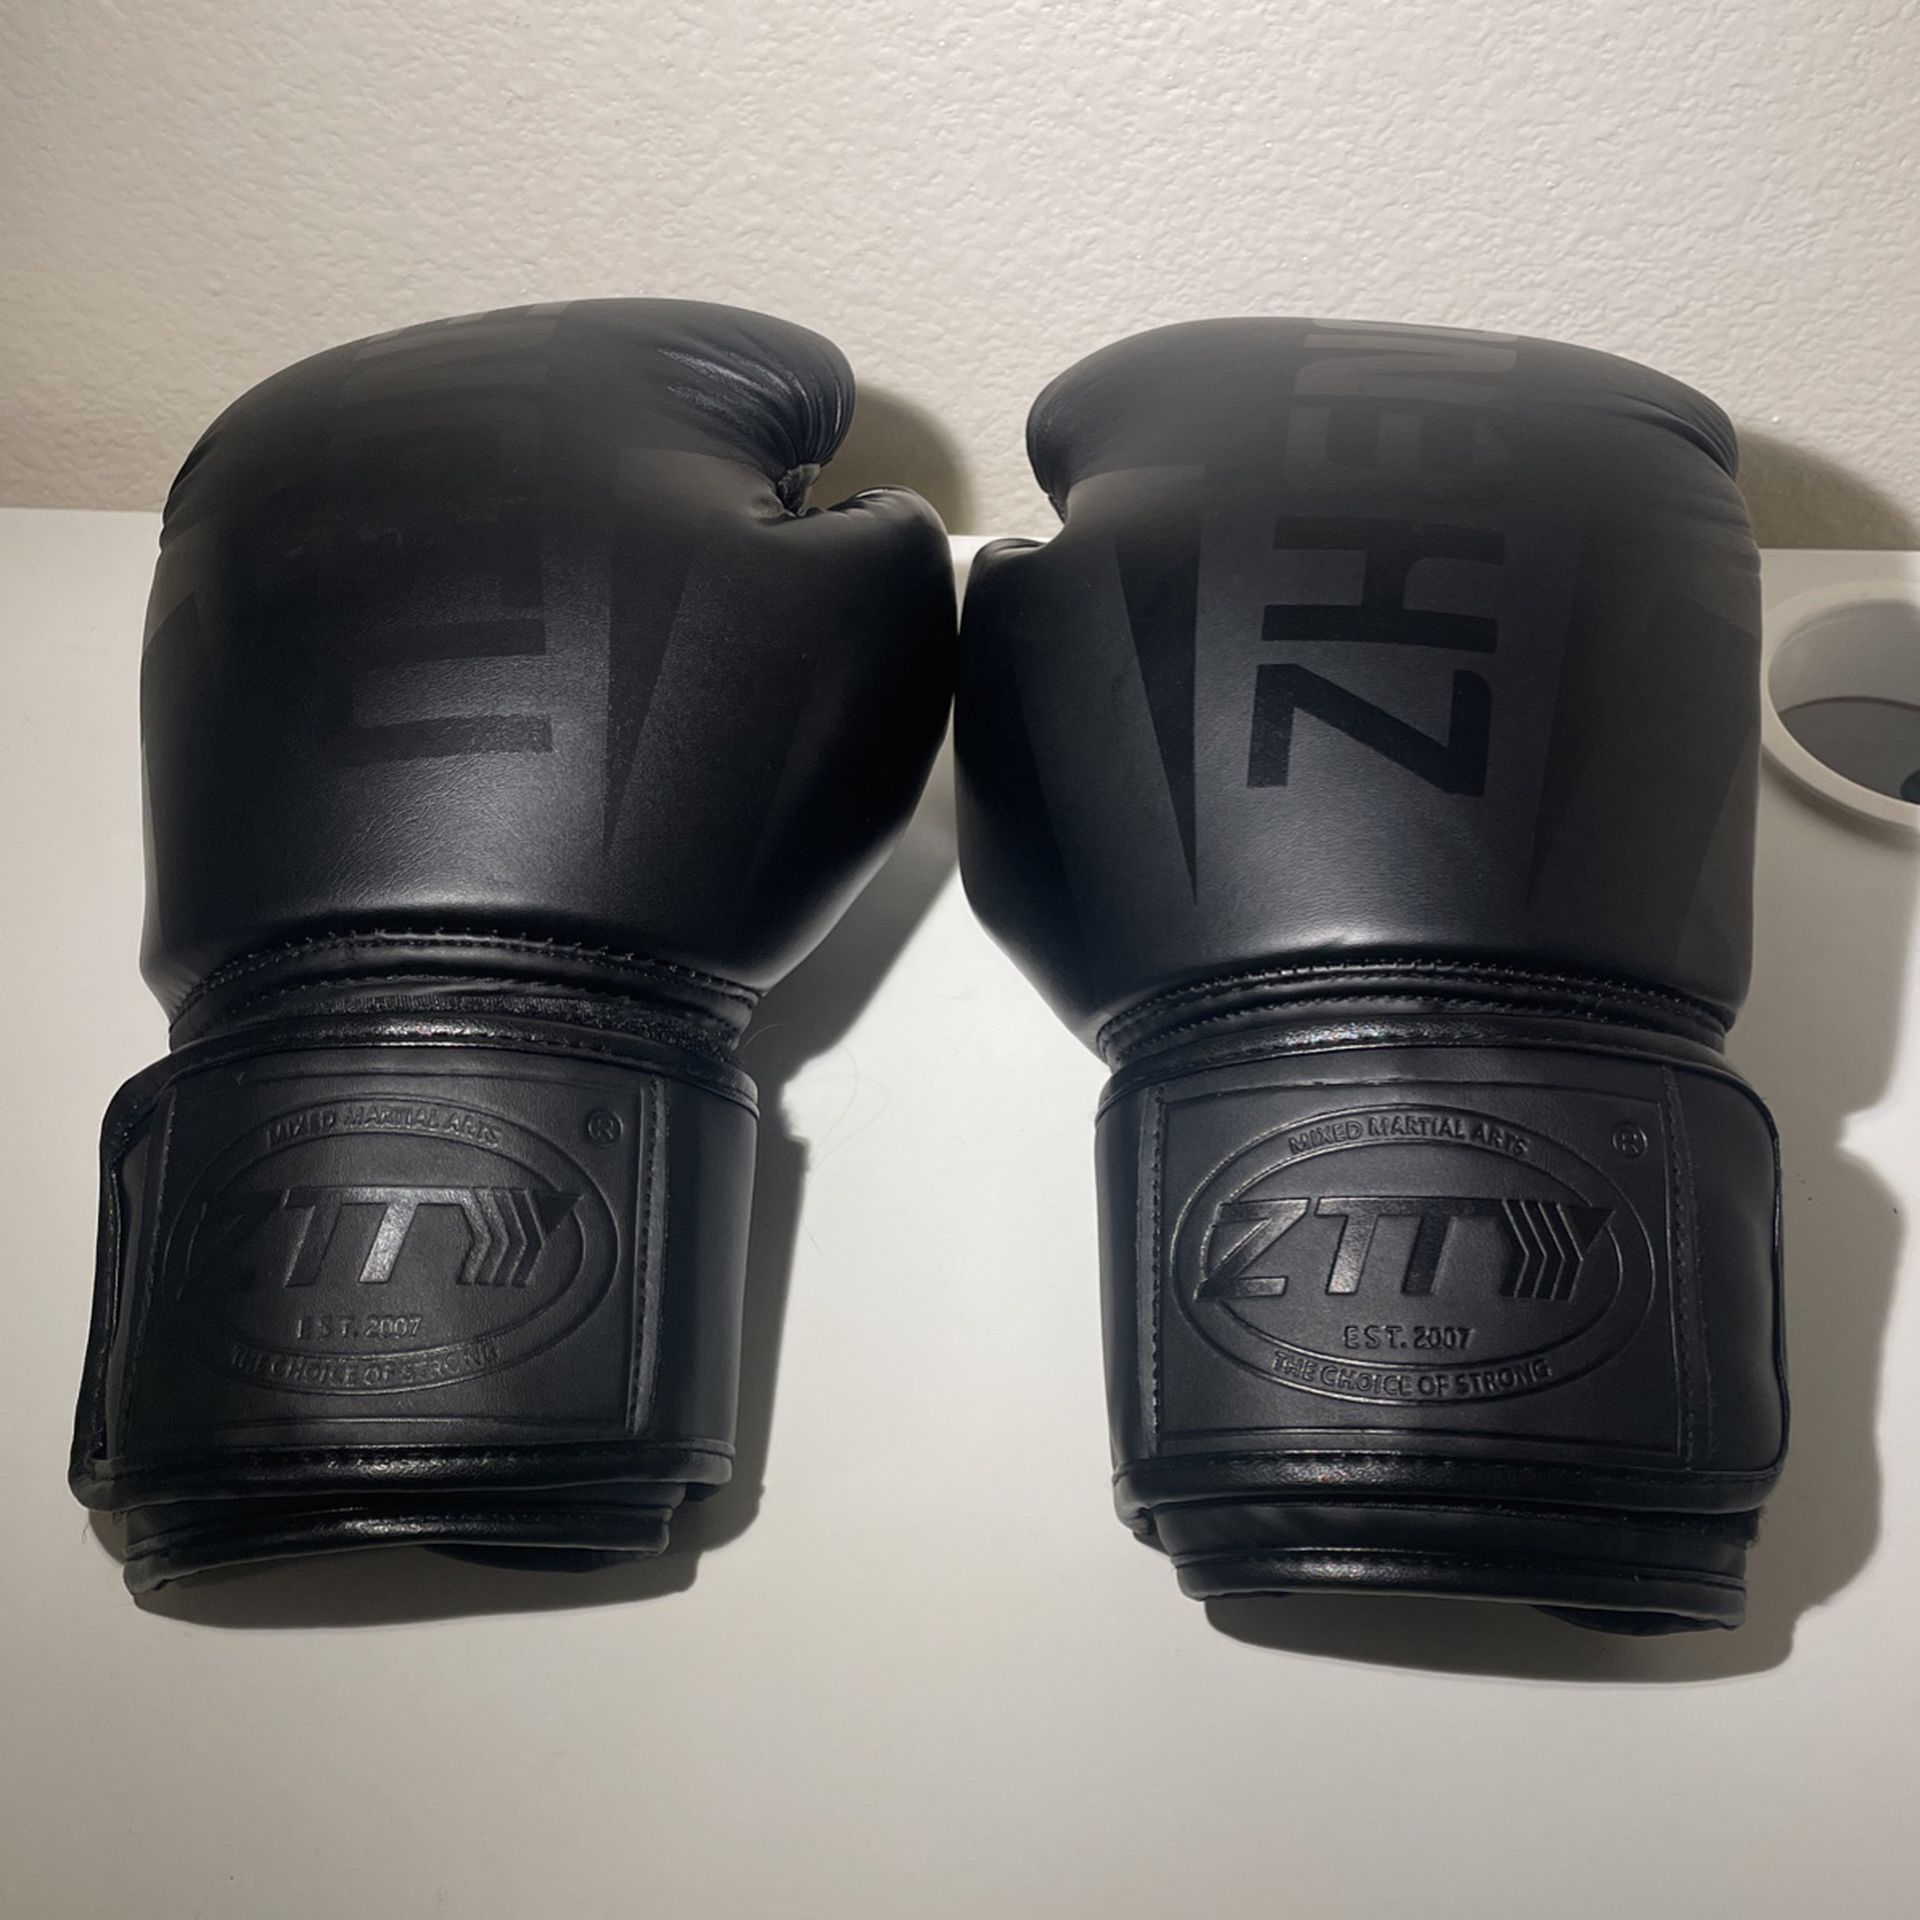 12oz All Black Boxing Gloves